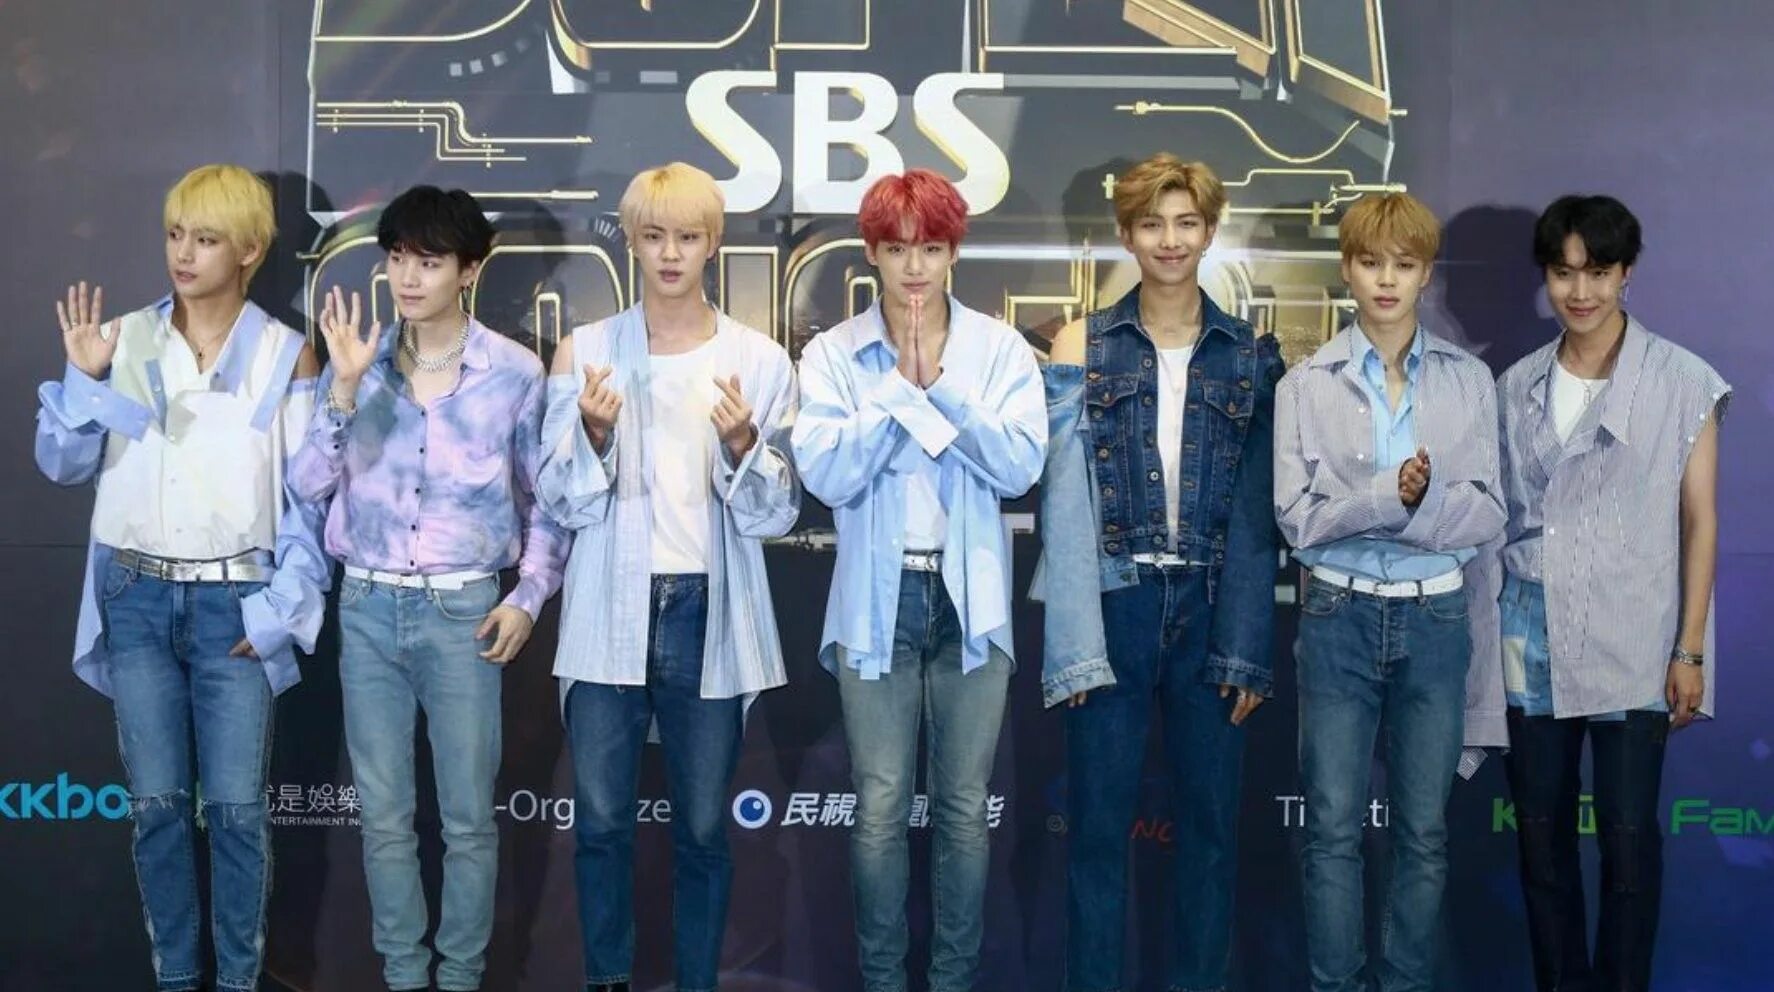 Bts super. SBS 2018 BTS. BTS super Concert in Taipei. Концерт BTS 2018. SBS новогодний концерт 2018 BTS.